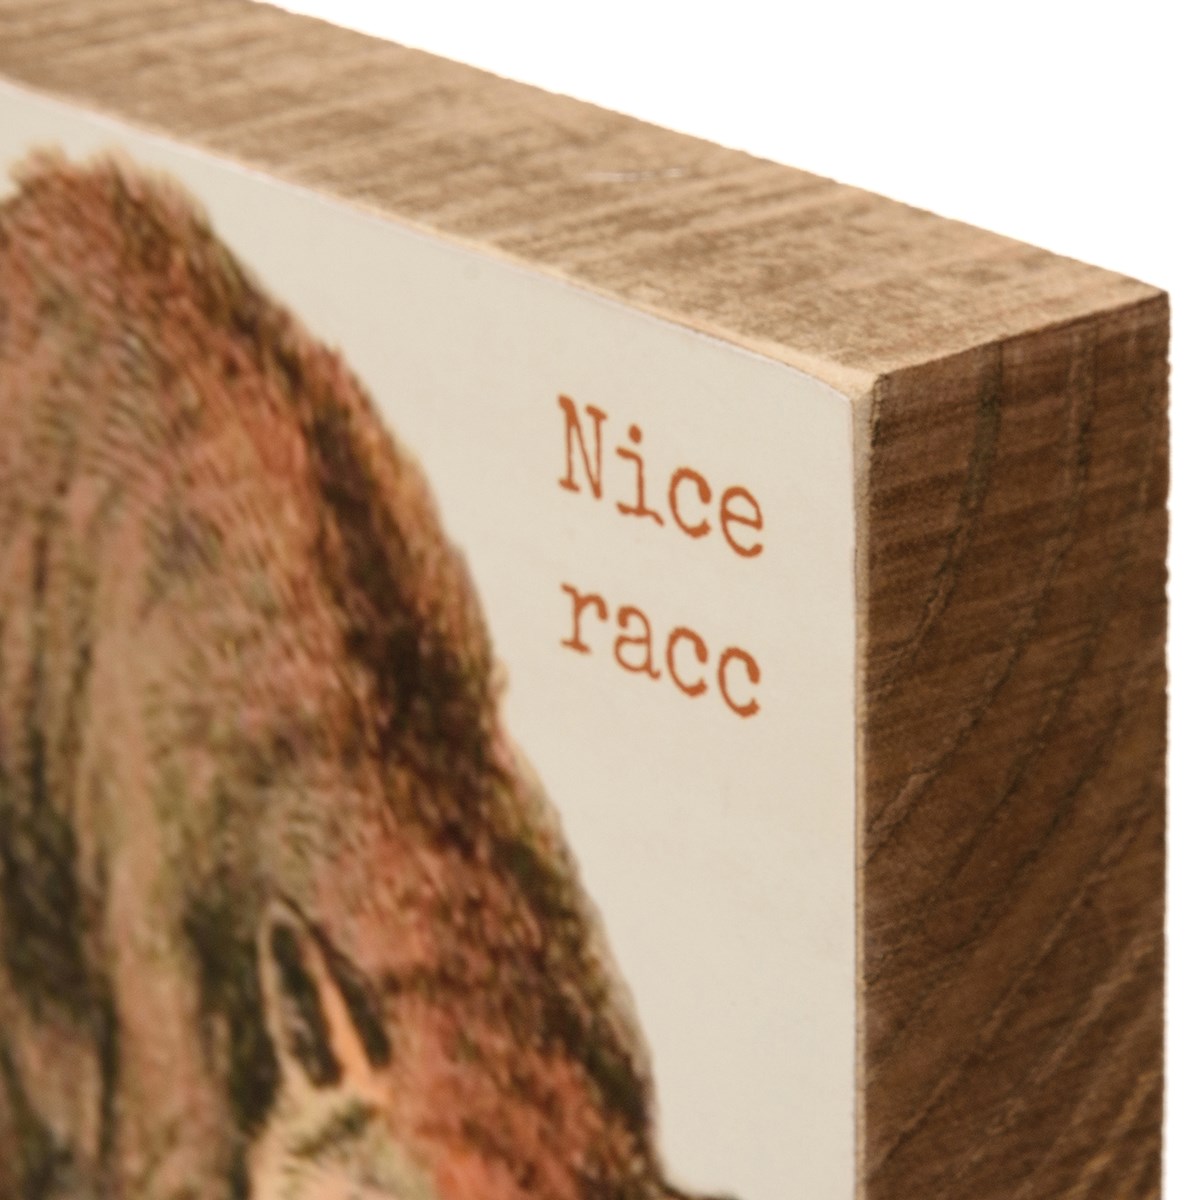 Nice Racc Block Sign - Wood, Paper